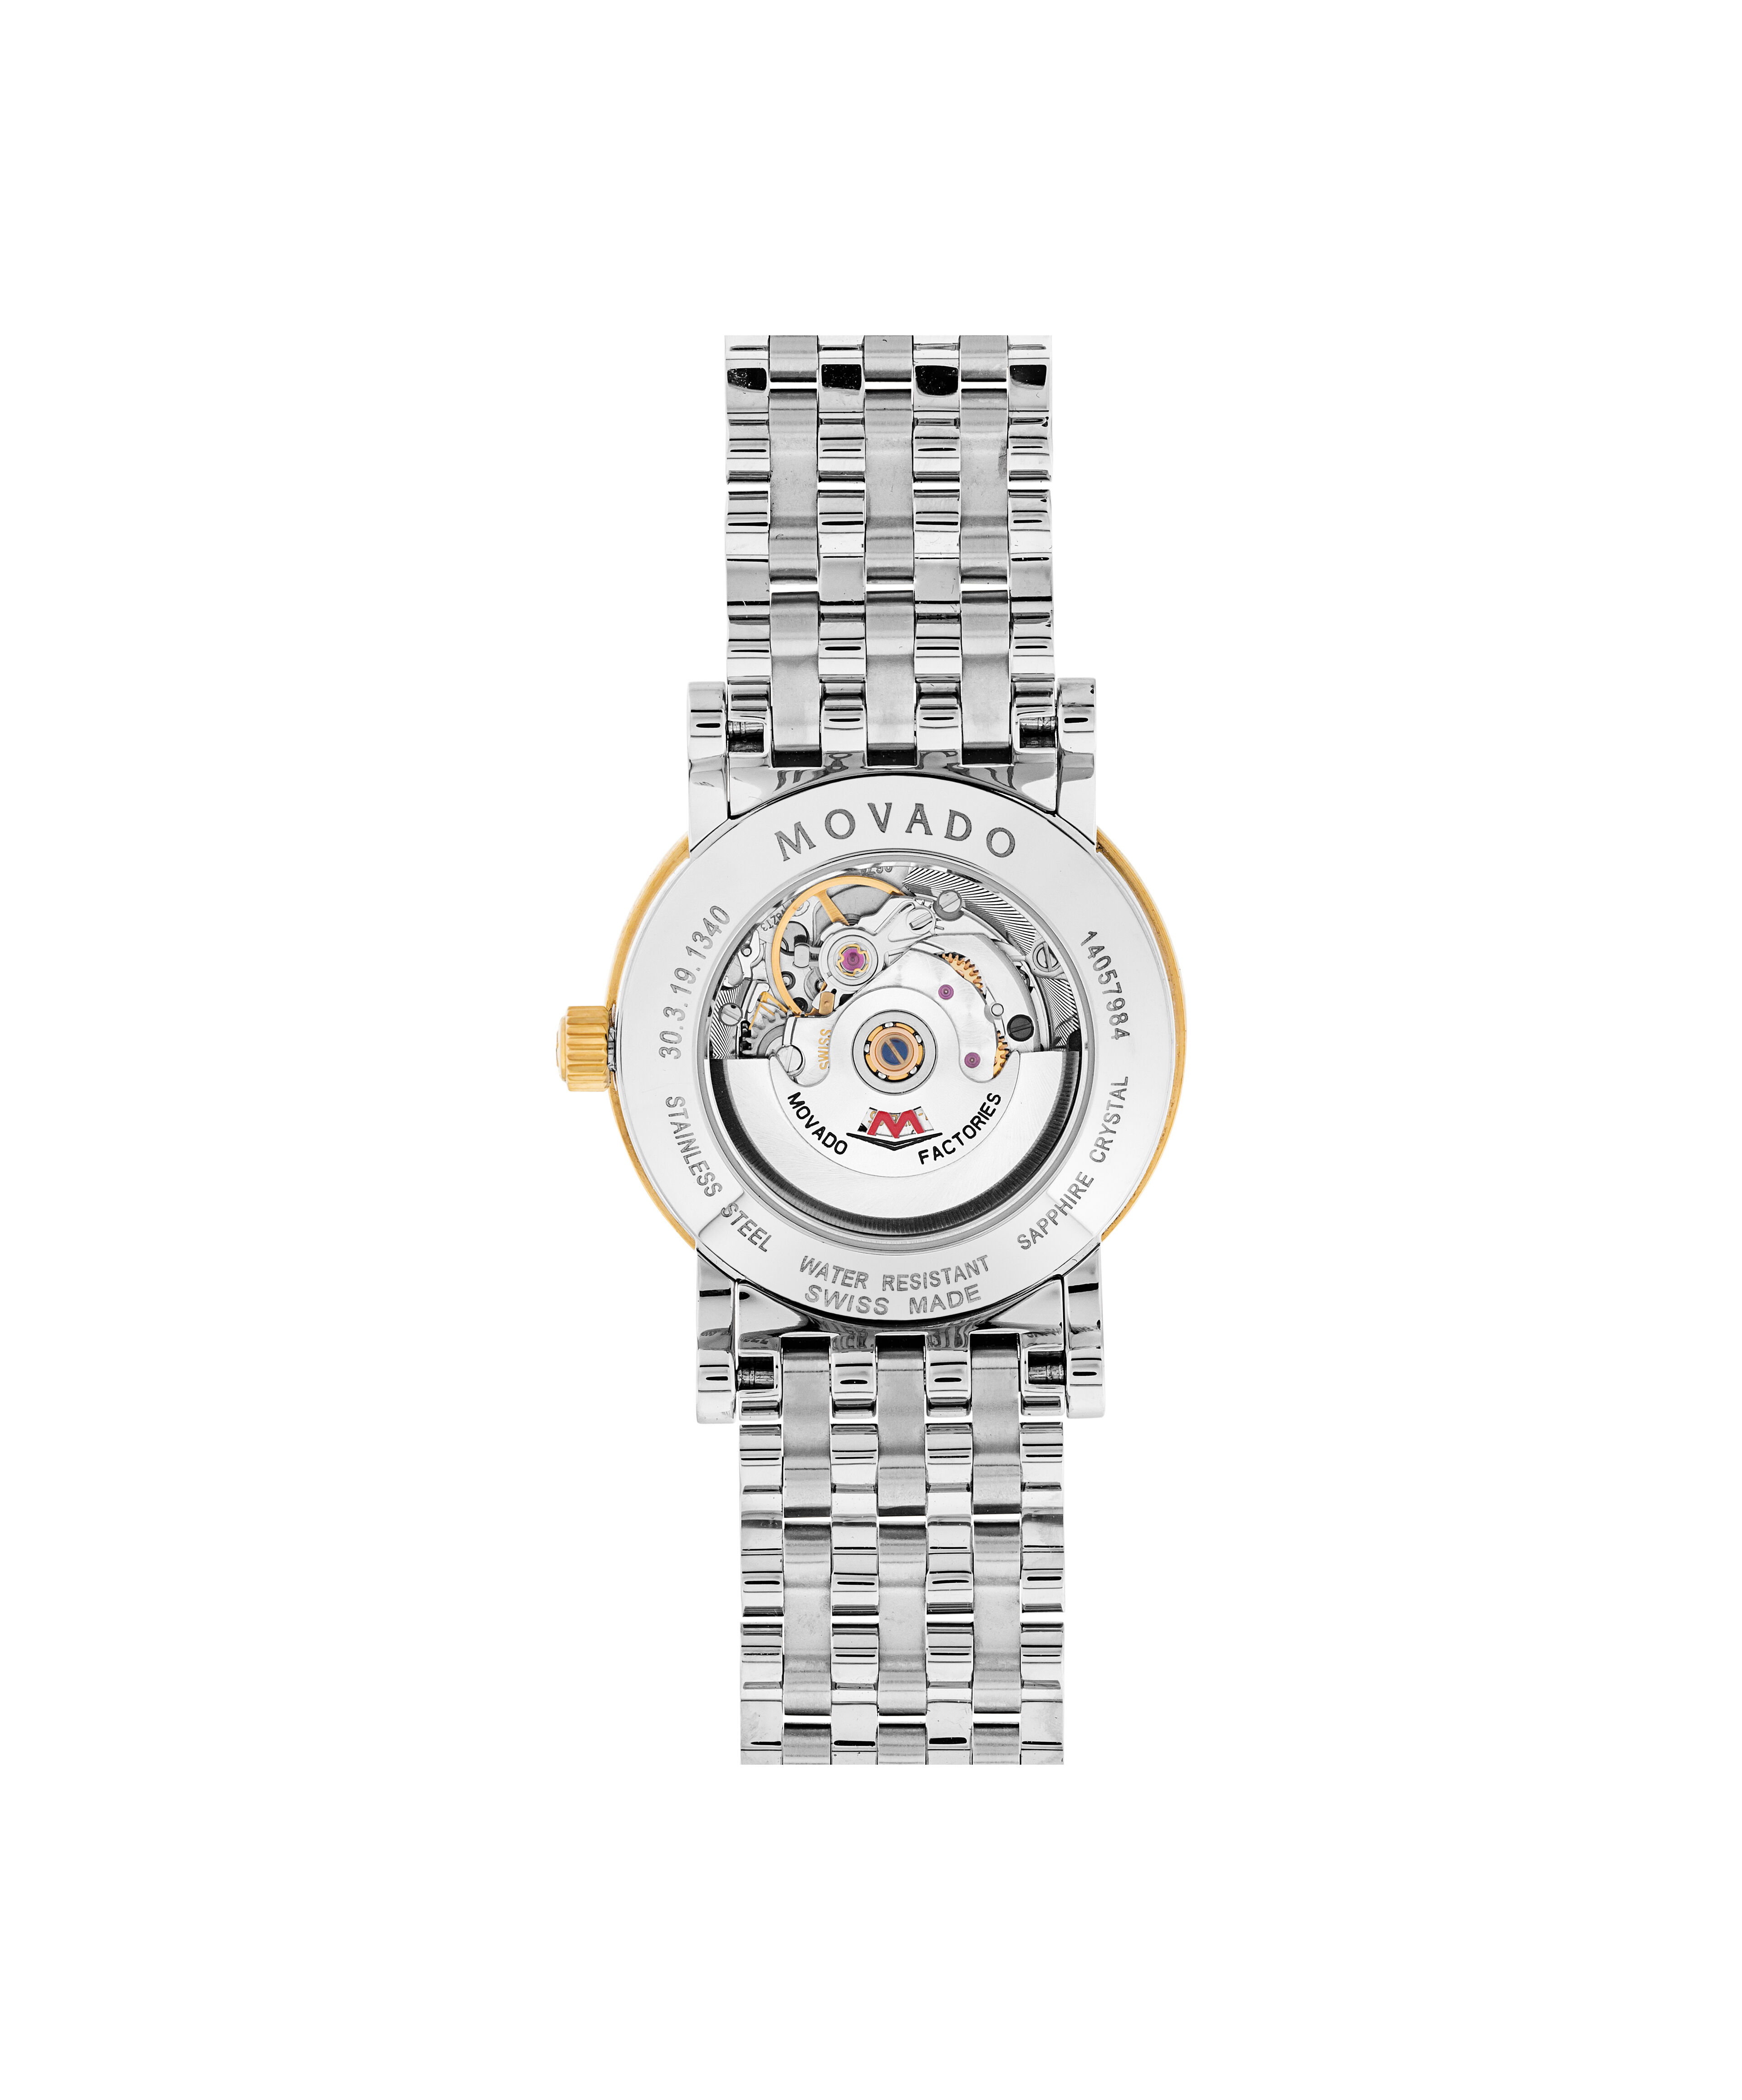 Imitation Parmigiani Fleurier Watch